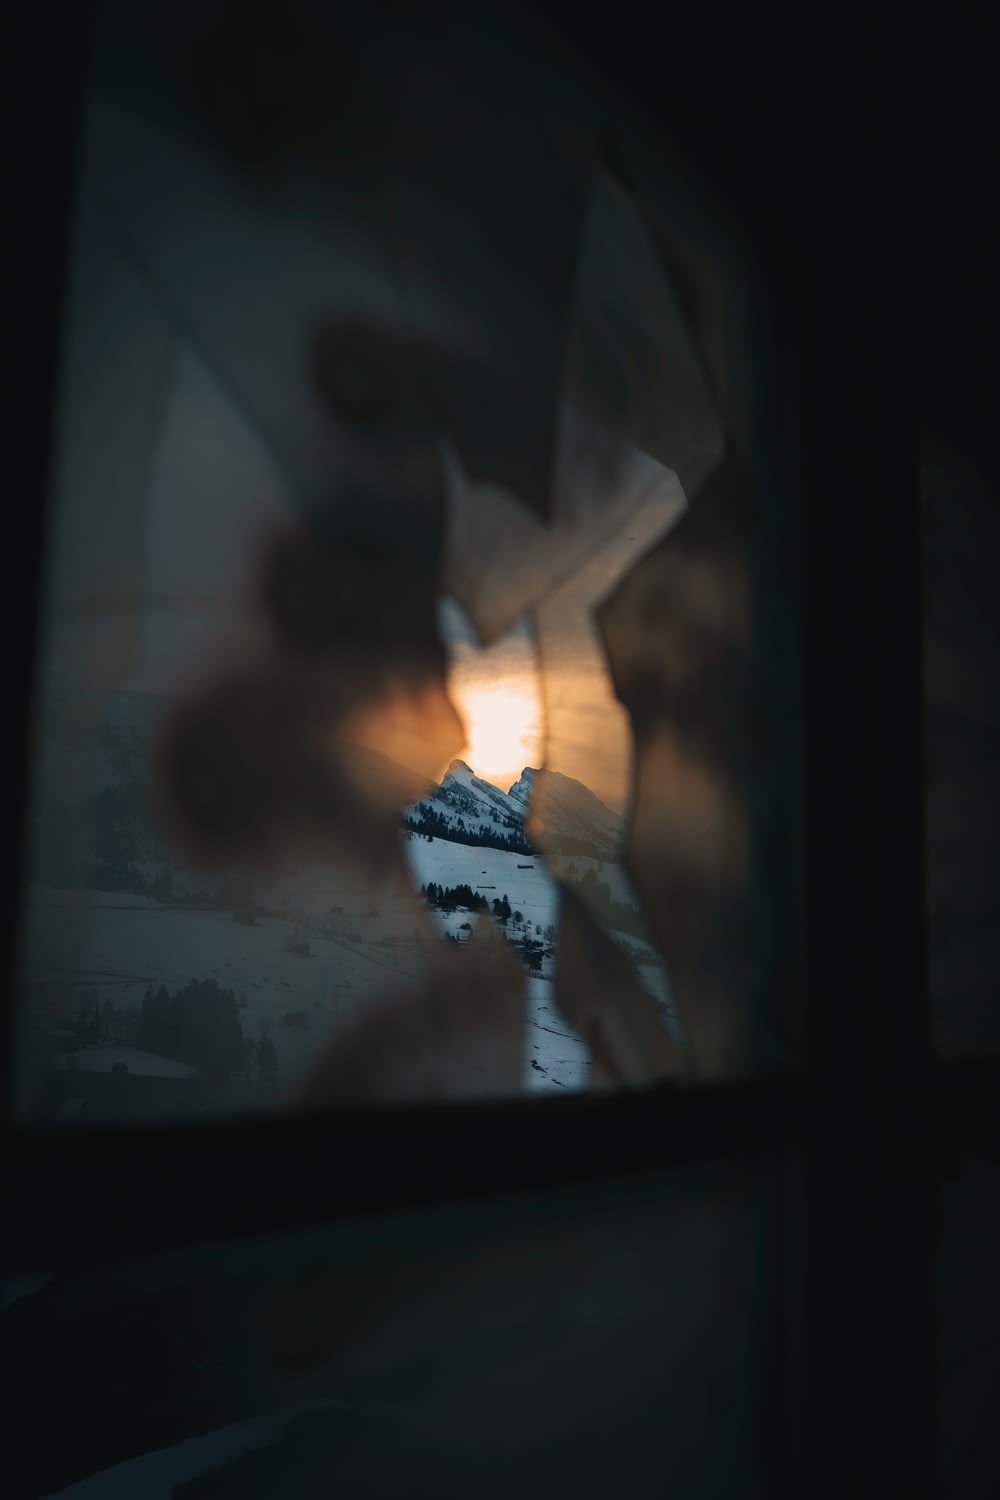 a blurry photo of a mountain seen through a window